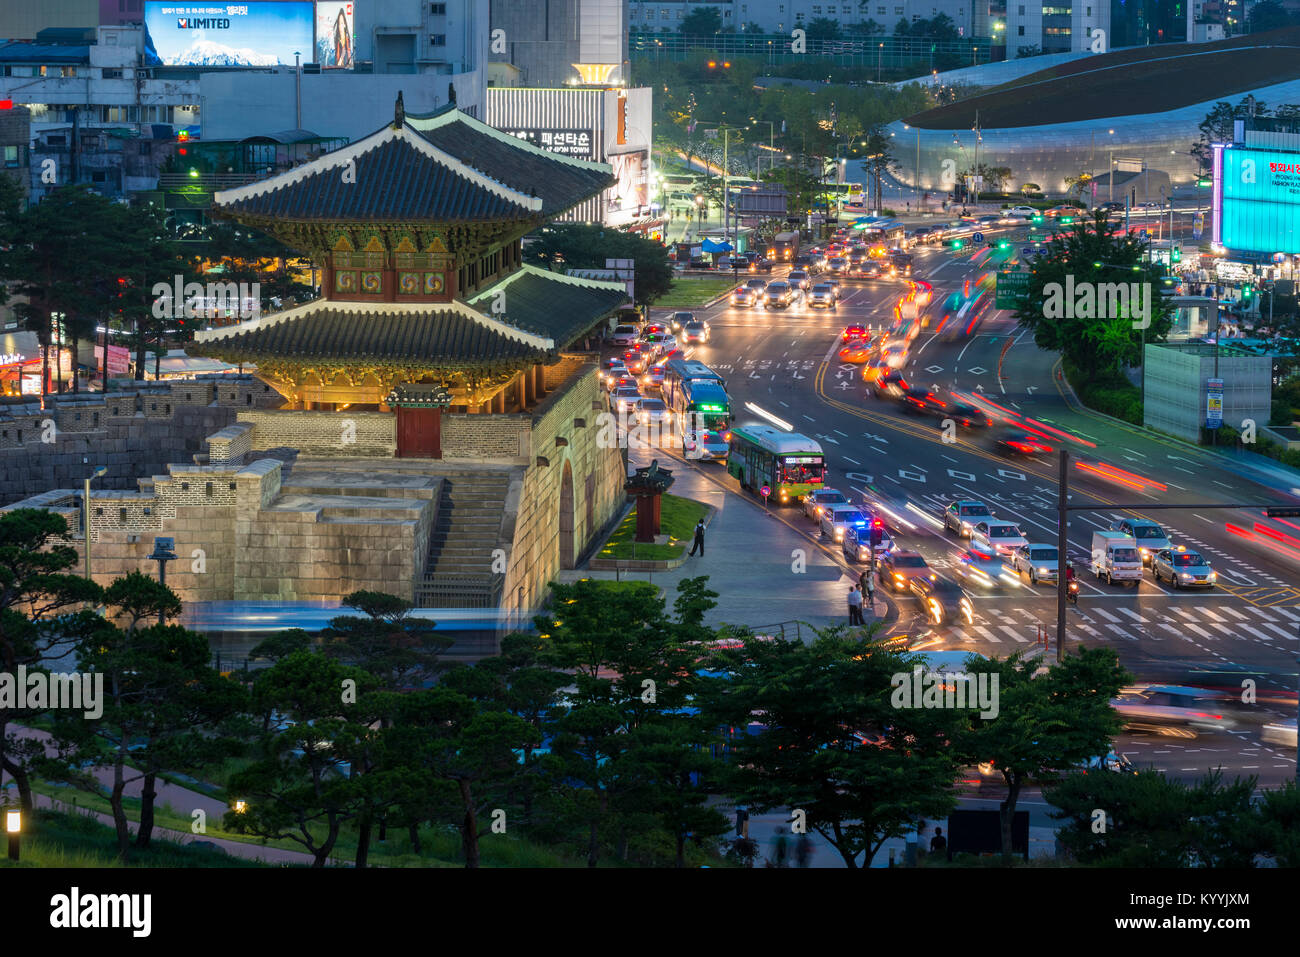 Datenverkehr, der dongdaemun Tor oder heunginjimun Tor, Seoul, Südkorea bei Nacht/Abend Stockfoto